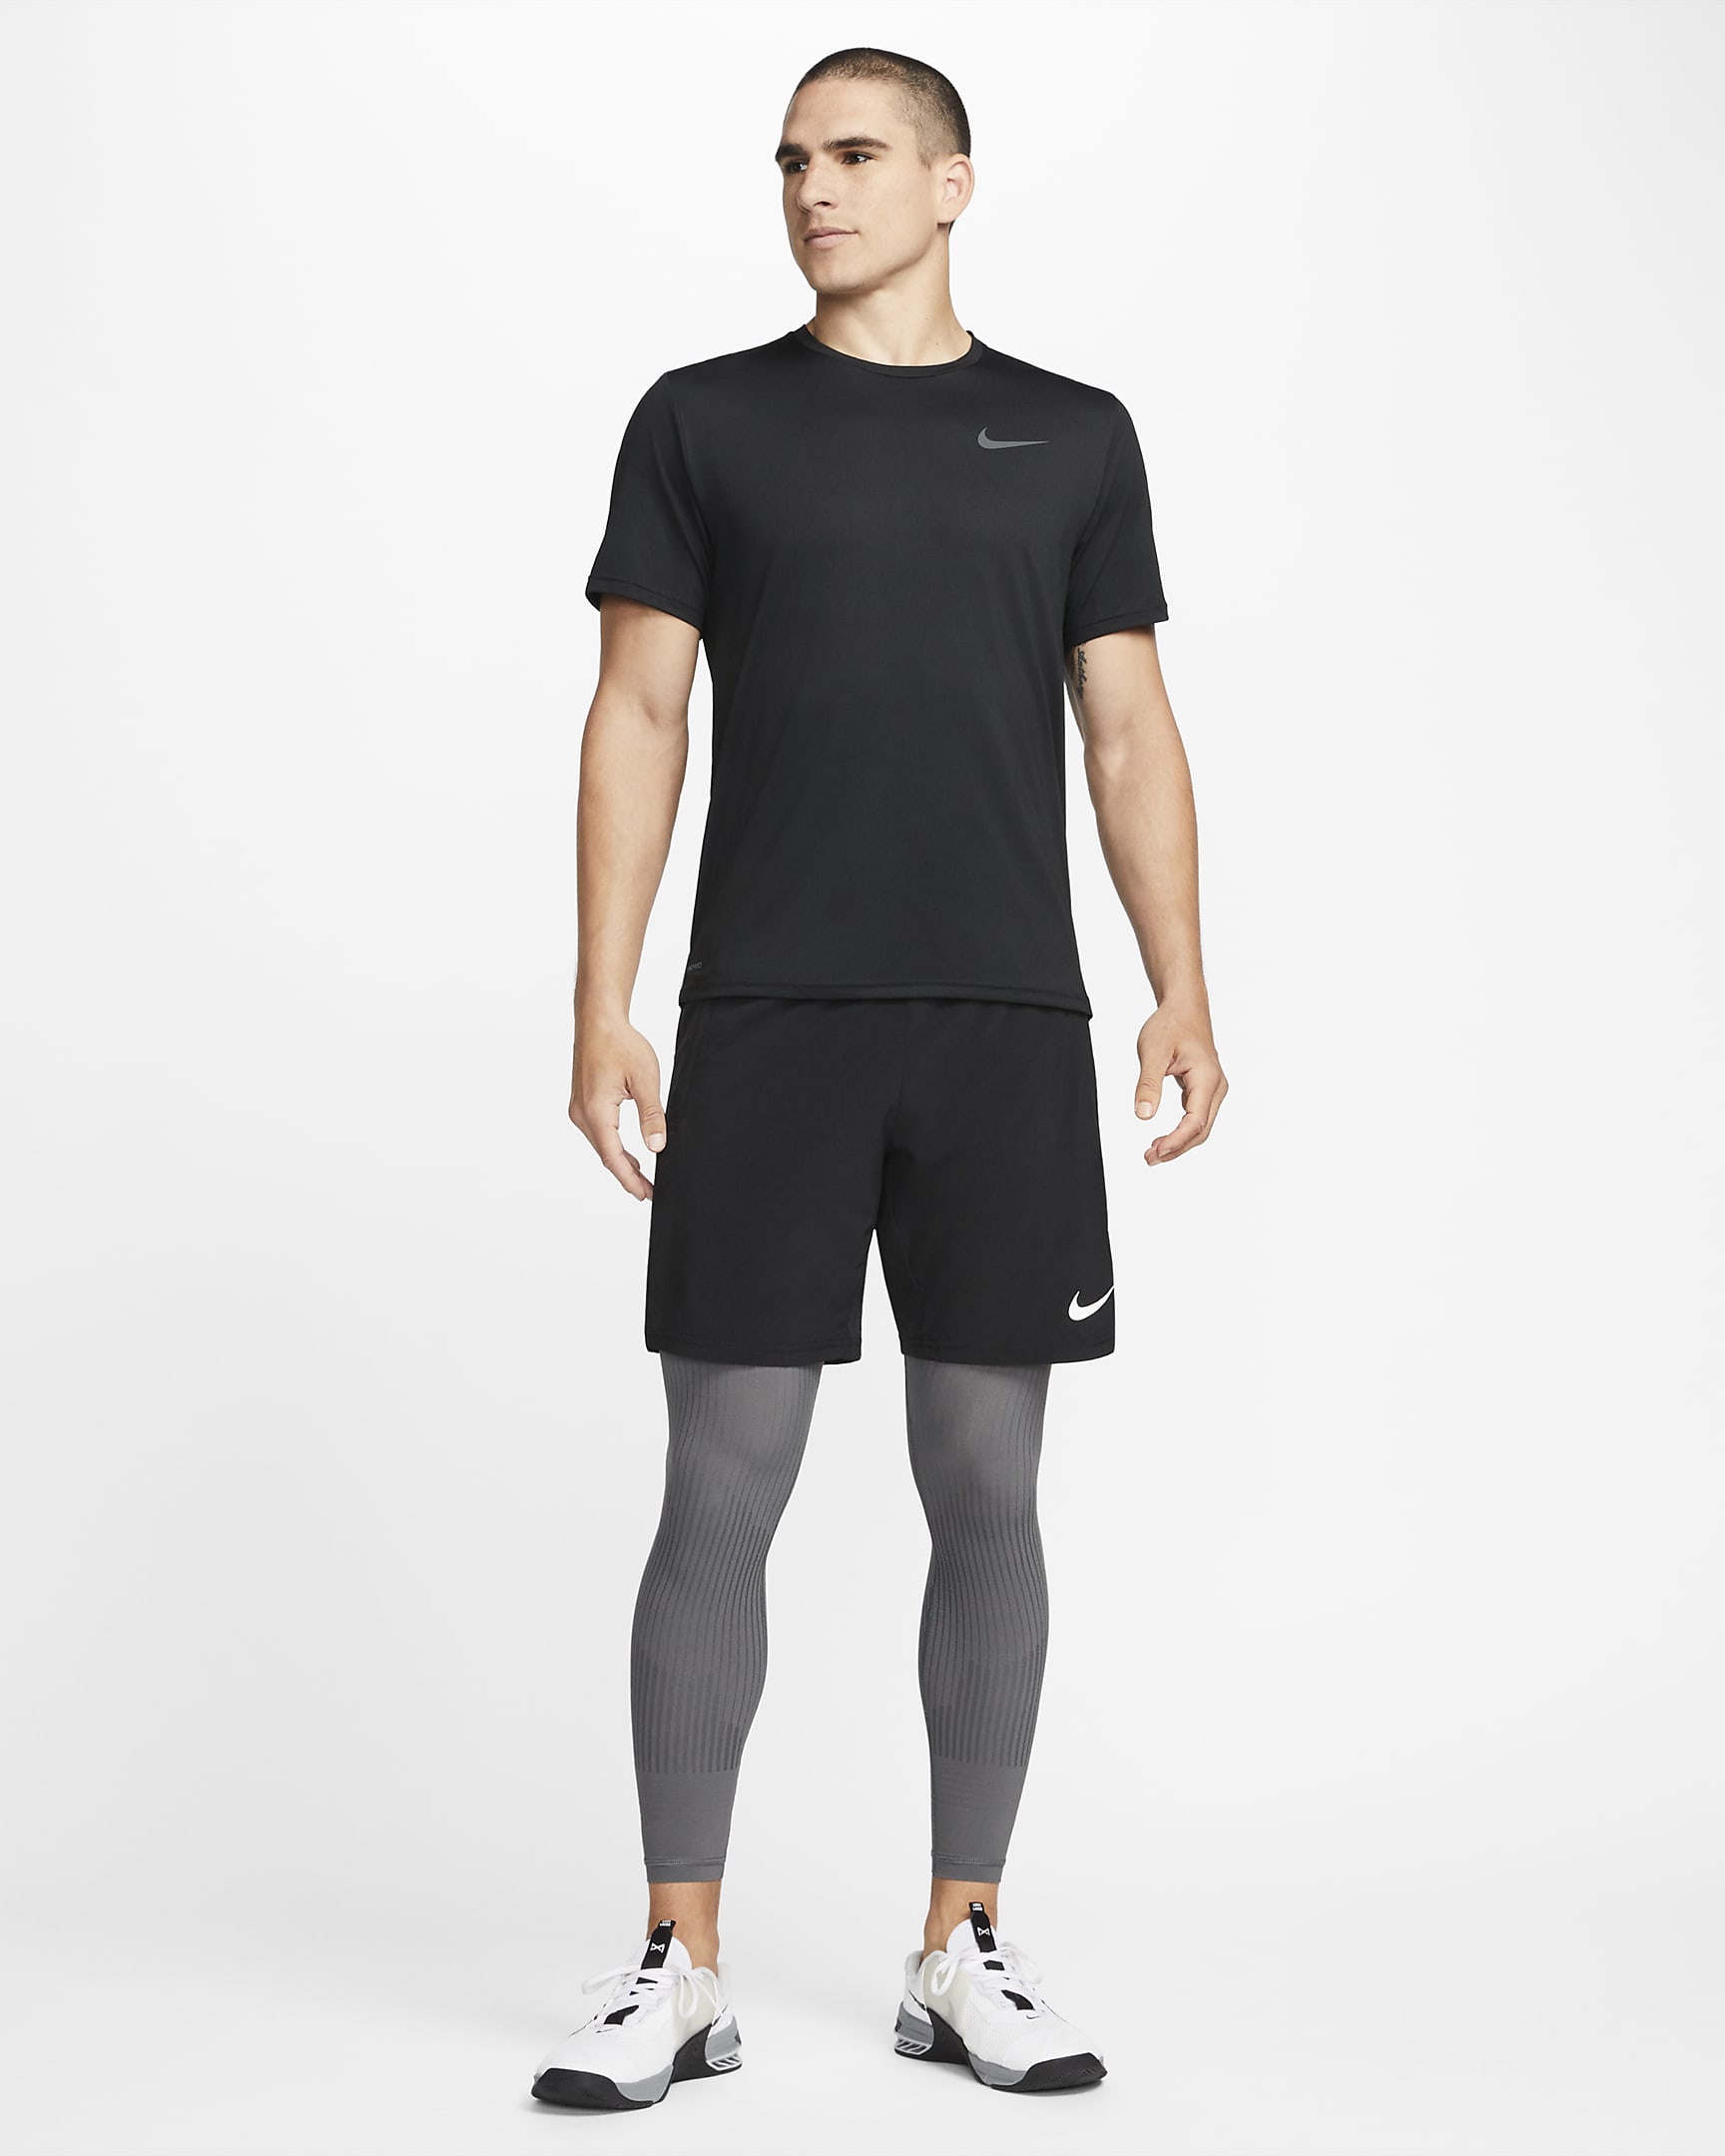 Nike Axis Performance System Men's Dri-FIT ADV Versatile Tights. Nike HR